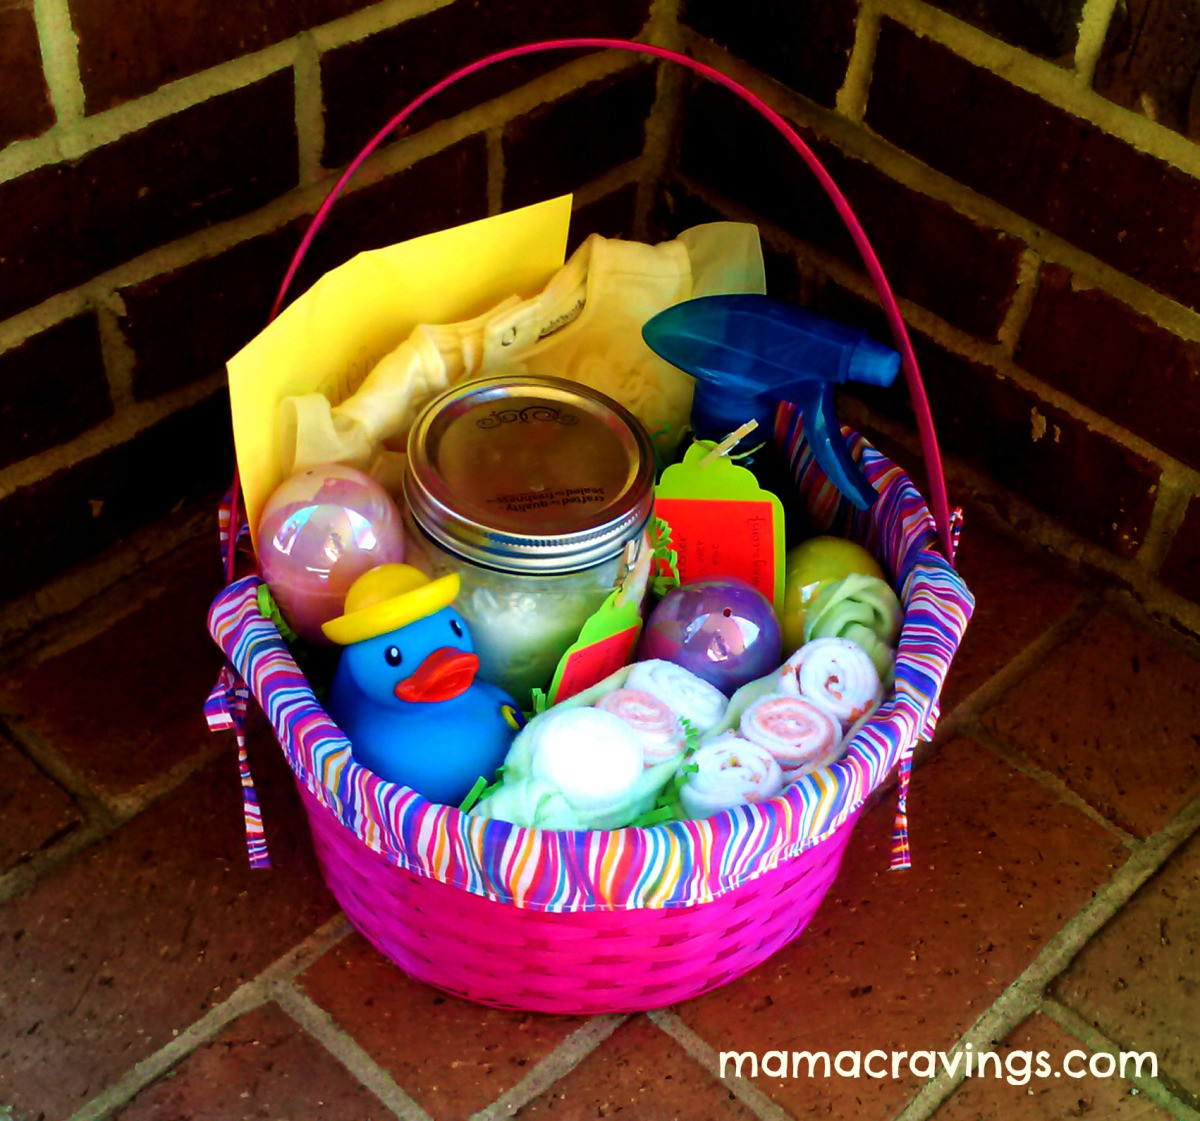 Gift Ideas For Easter Baskets
 Inspiration for Spring Baby Gift Easter Basket